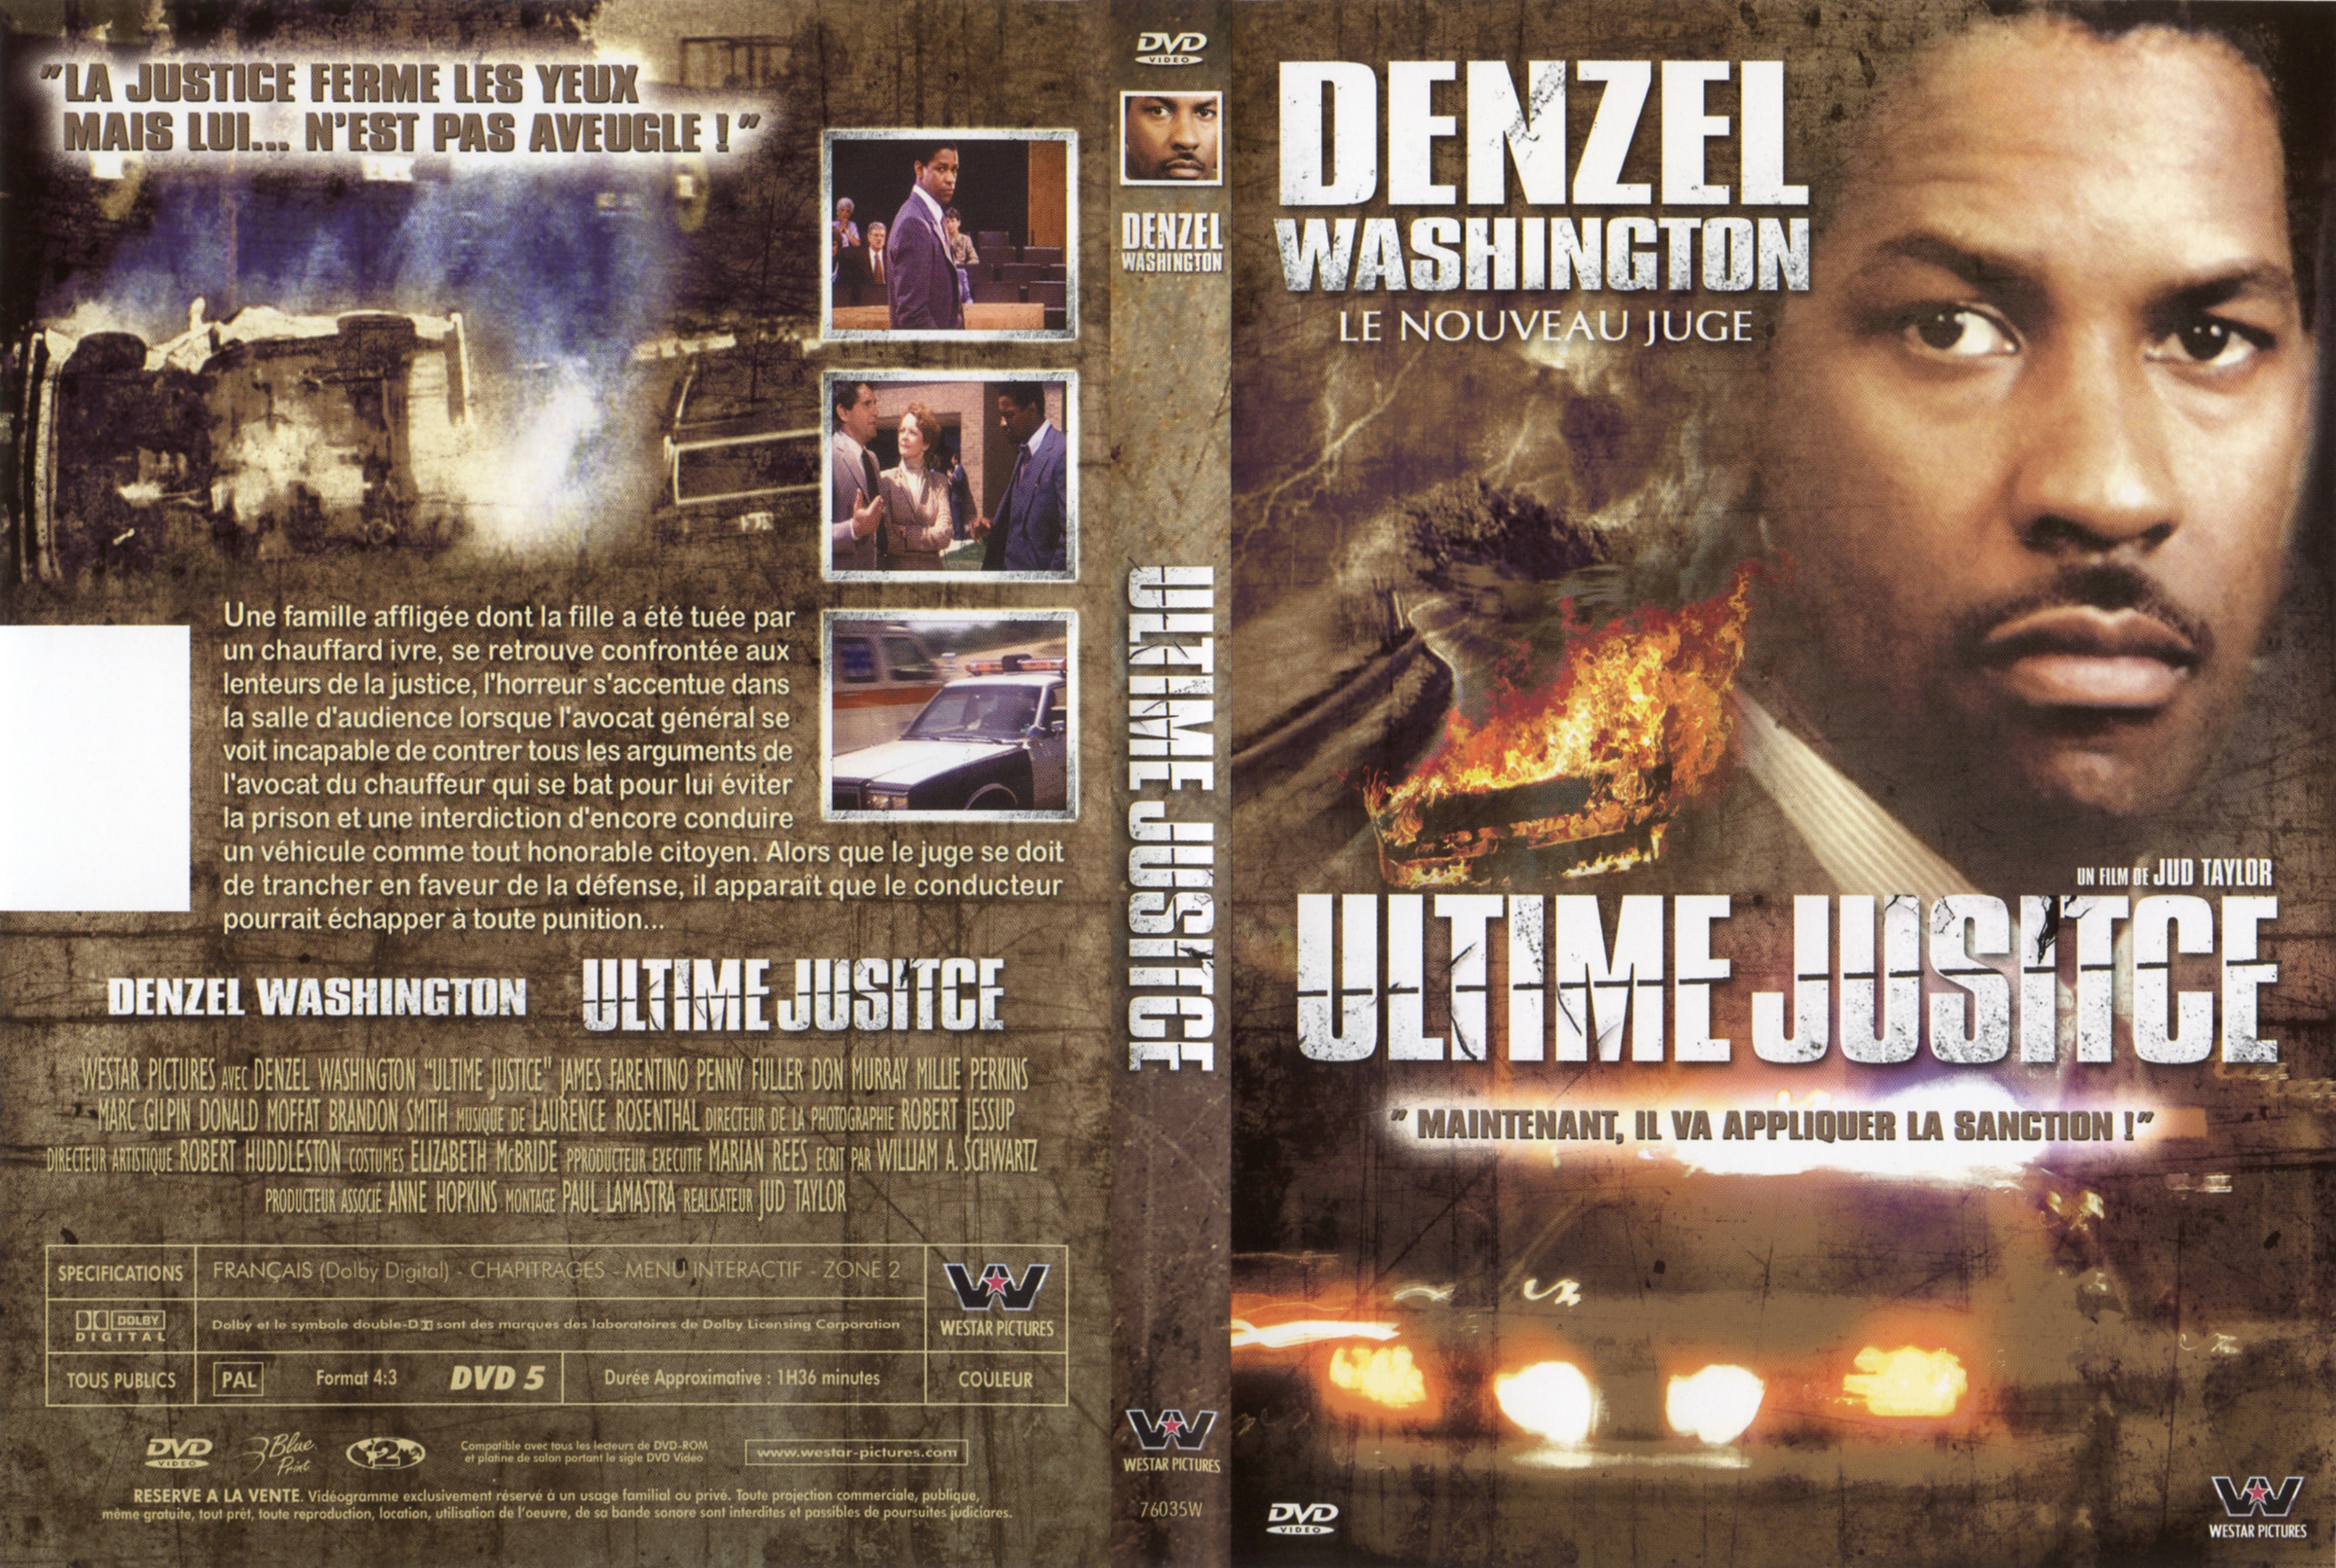 Jaquette DVD Ultime justice